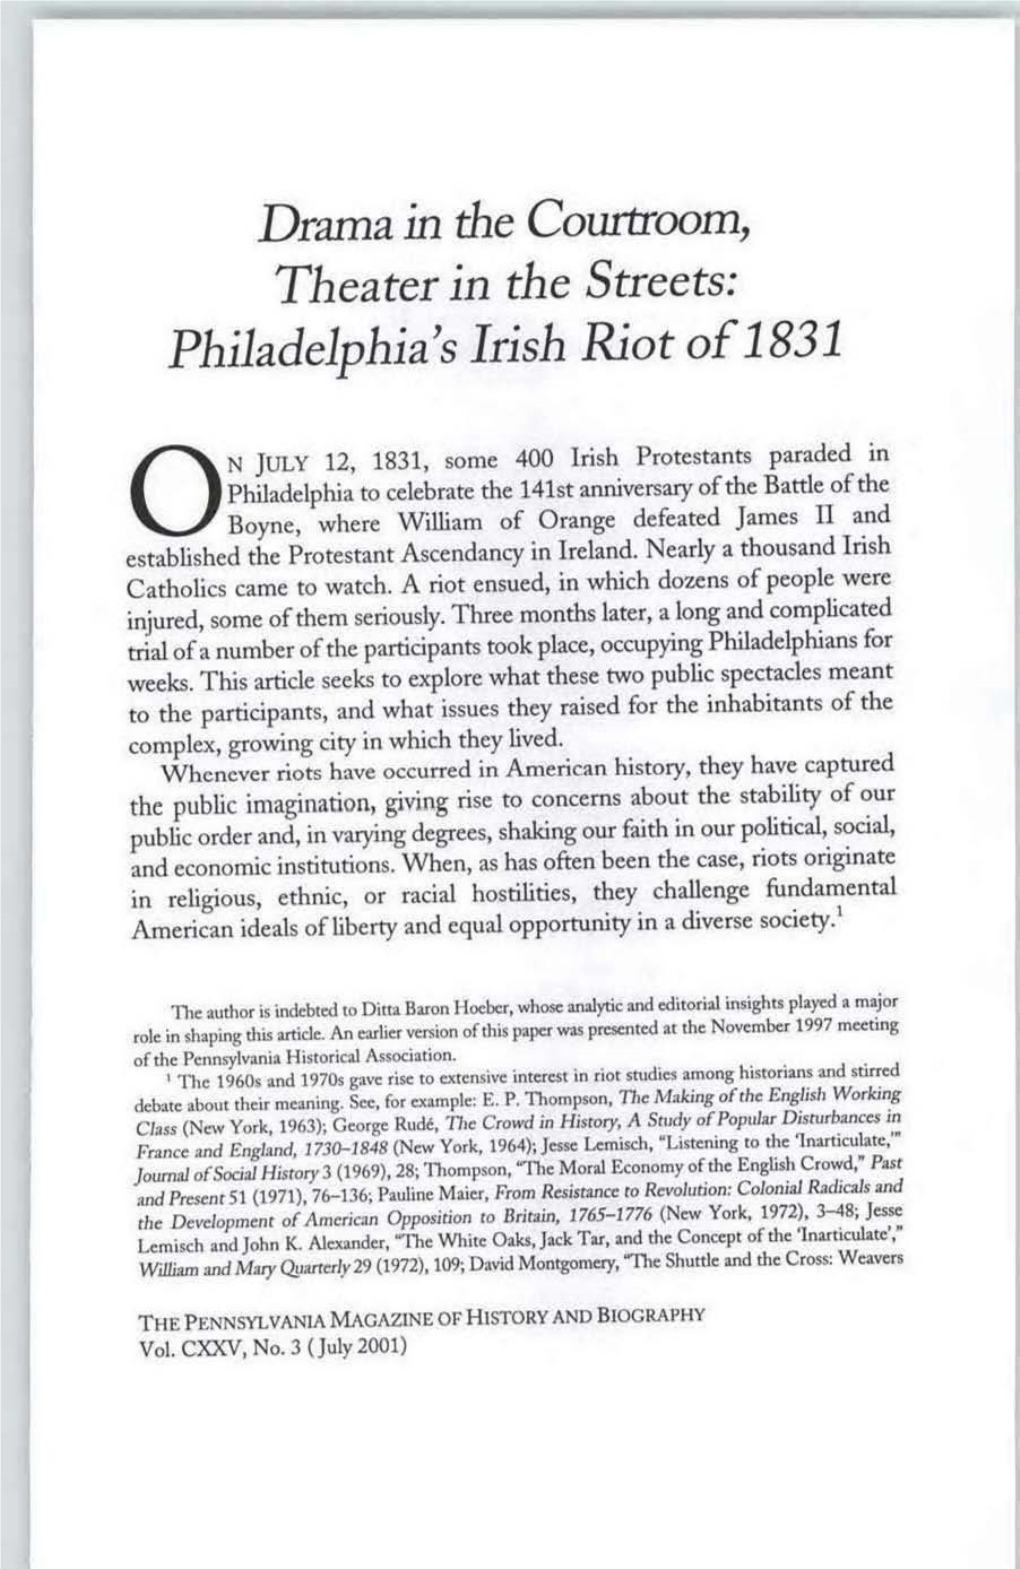 Philadelphia's Irish Riot of 1831